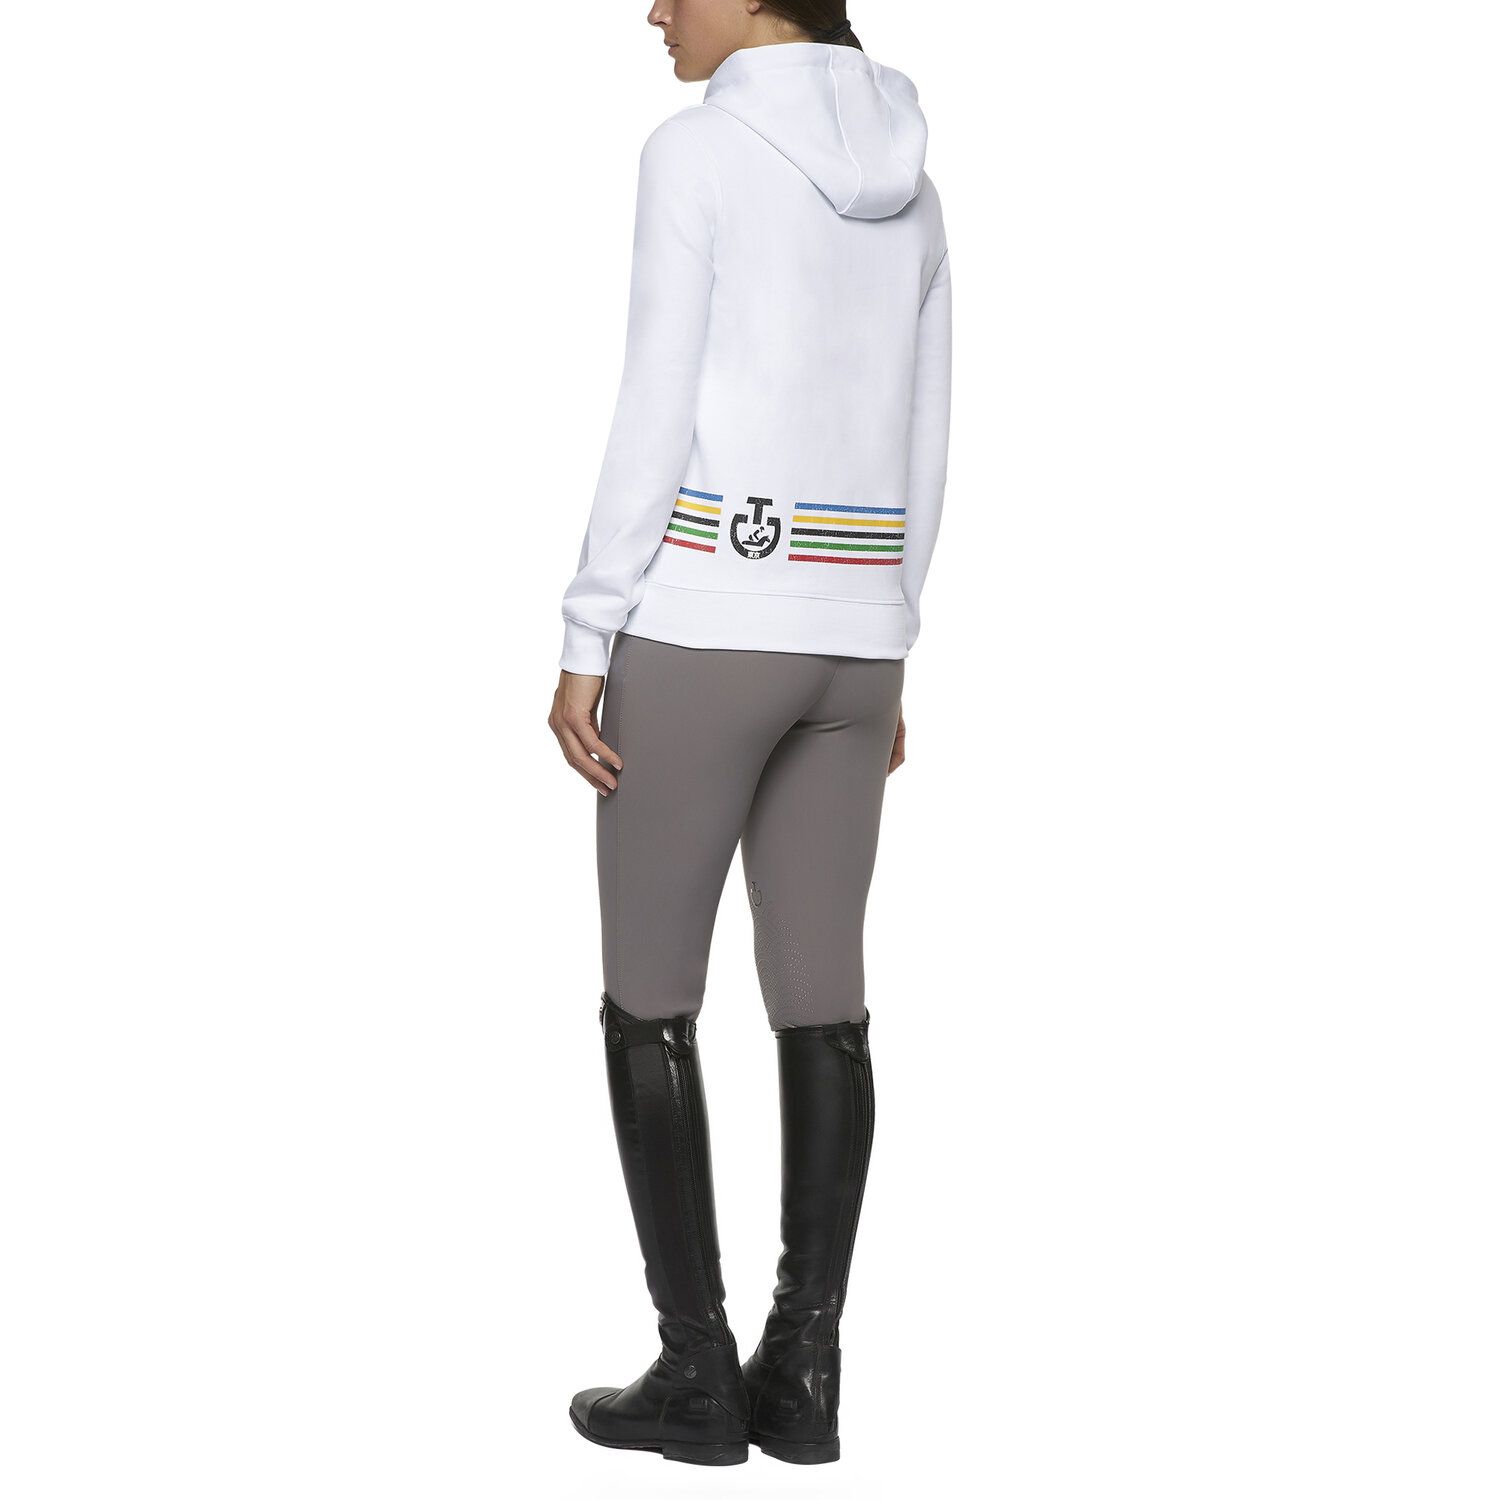 Cavalleria Toscana Women's Sweatshirt with a Hoodie WHITE-3